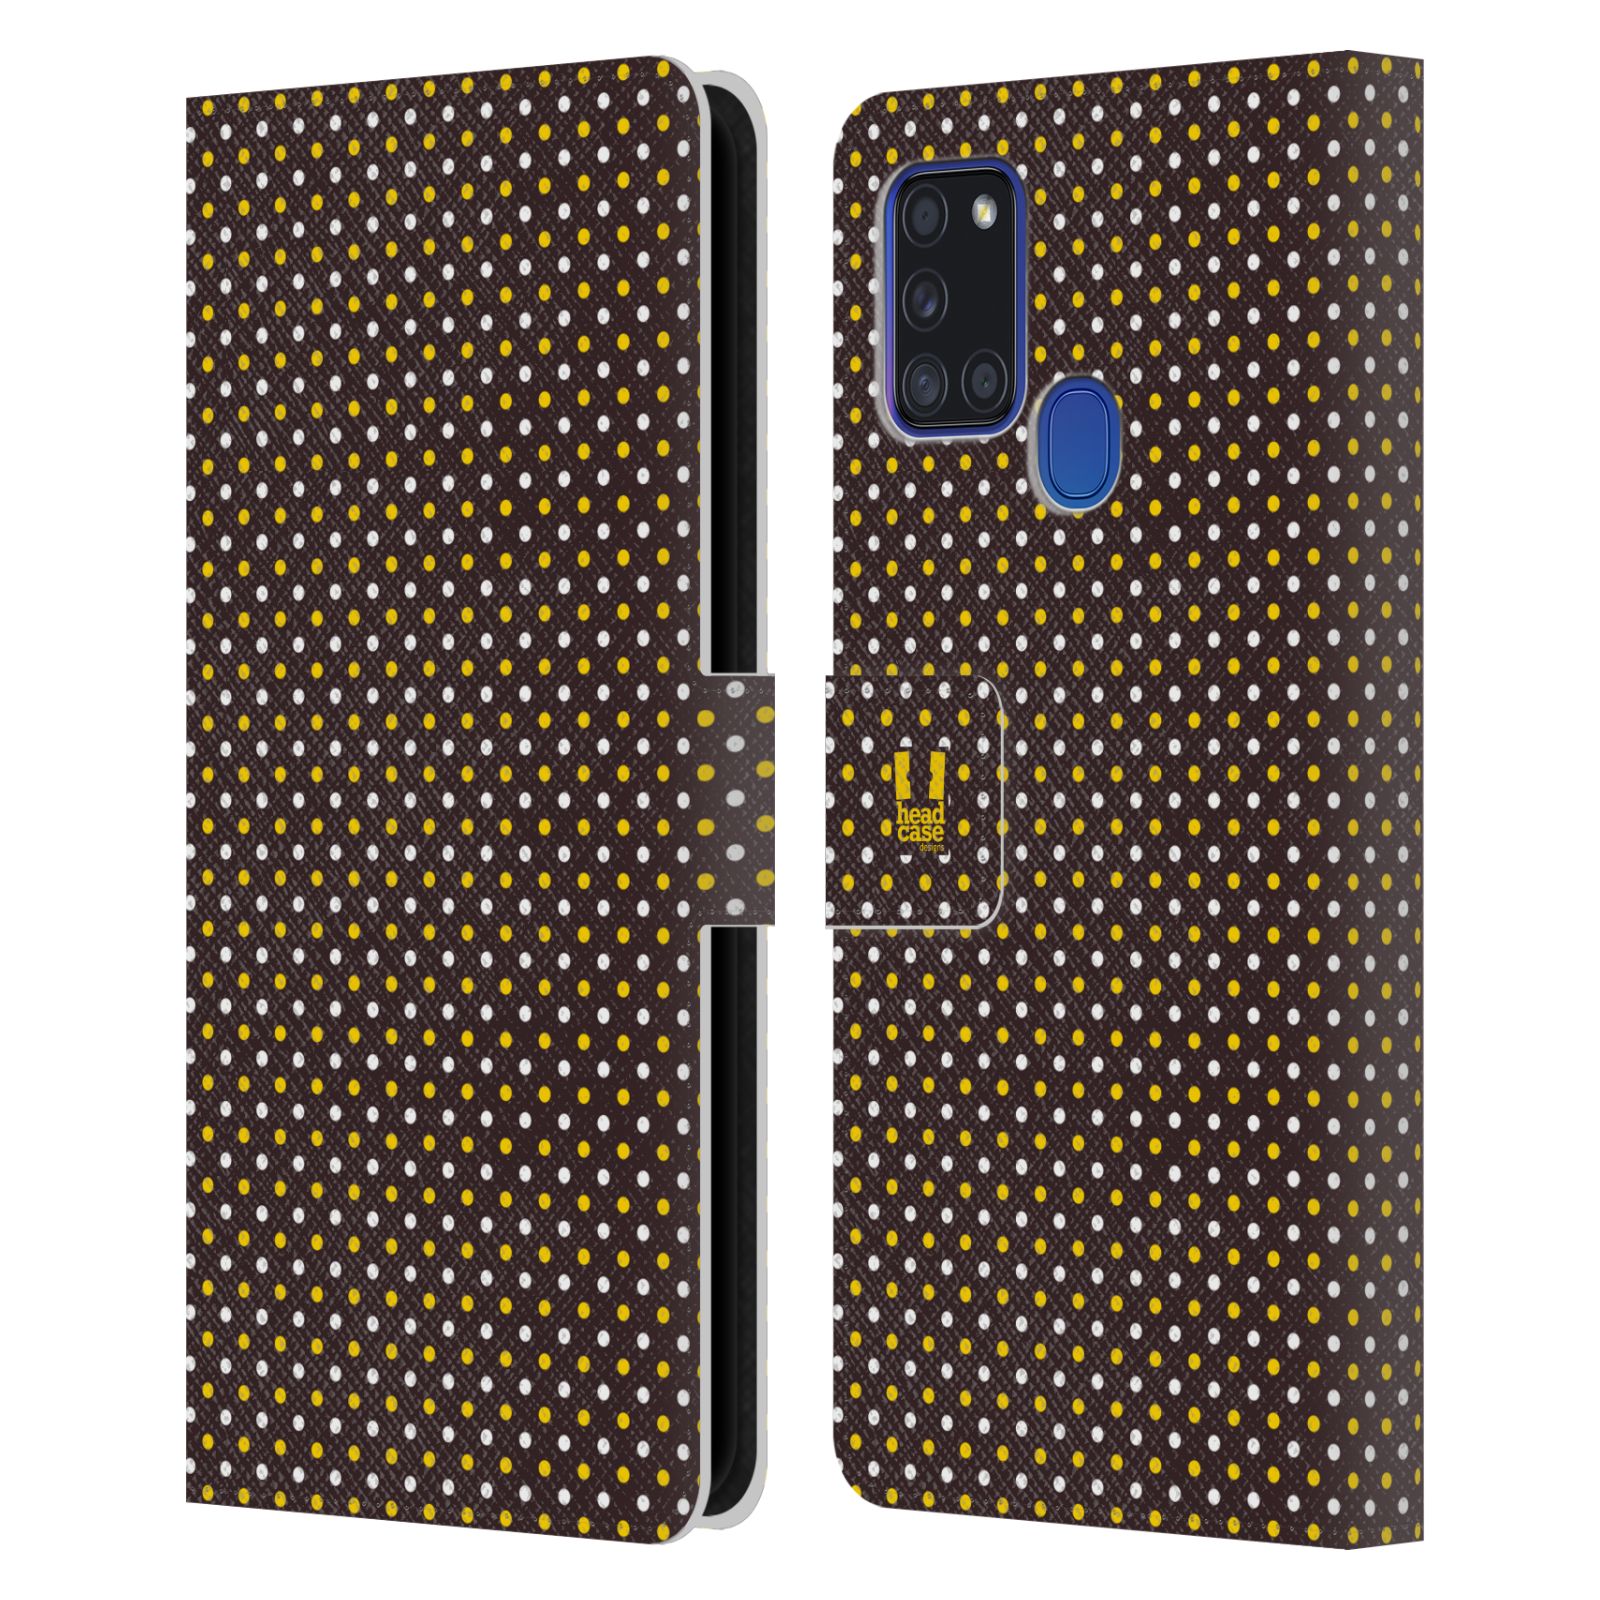 HEAD CASE Flipové pouzdro pro mobil Samsung Galaxy A21s VČELÍ VZOR puntíky hnědá a žlutá